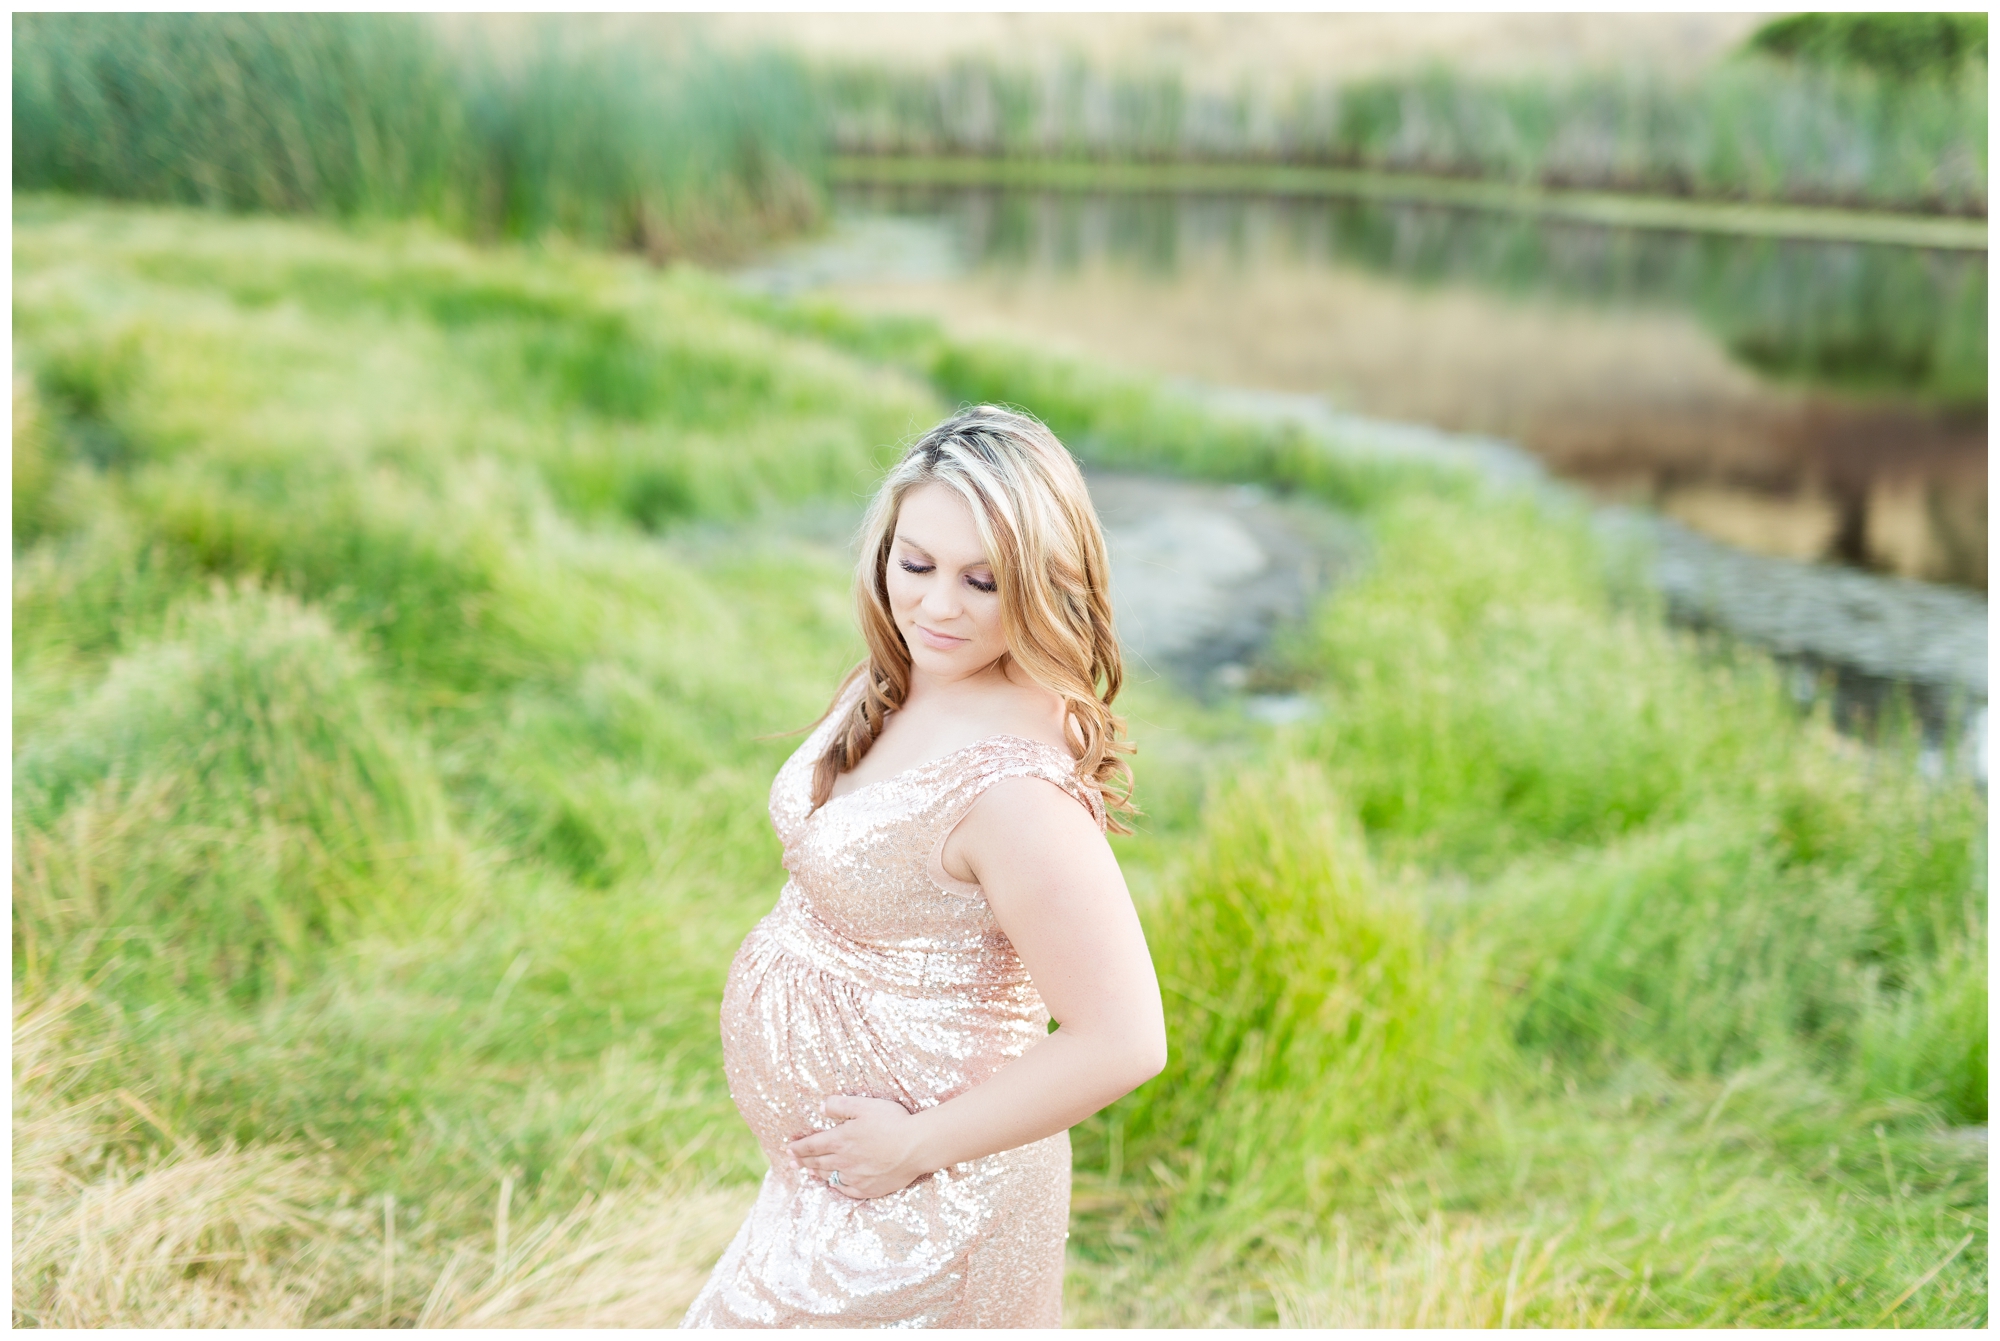 Morgan Hill Maternity Photographer_0013.jpg